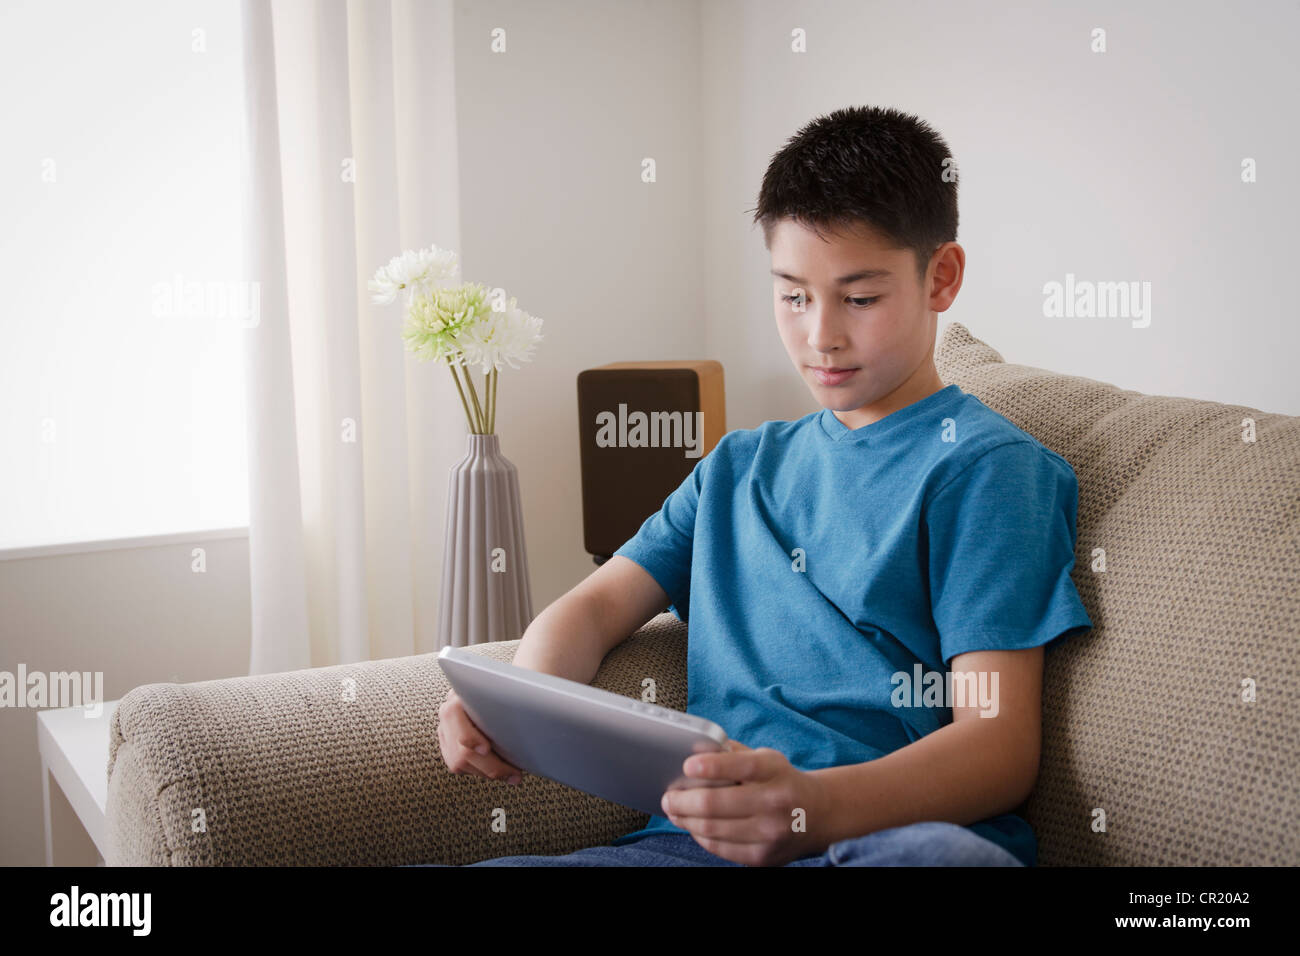 USA, Californie, Los Angeles, Boy (10-11) using digital tablet Banque D'Images